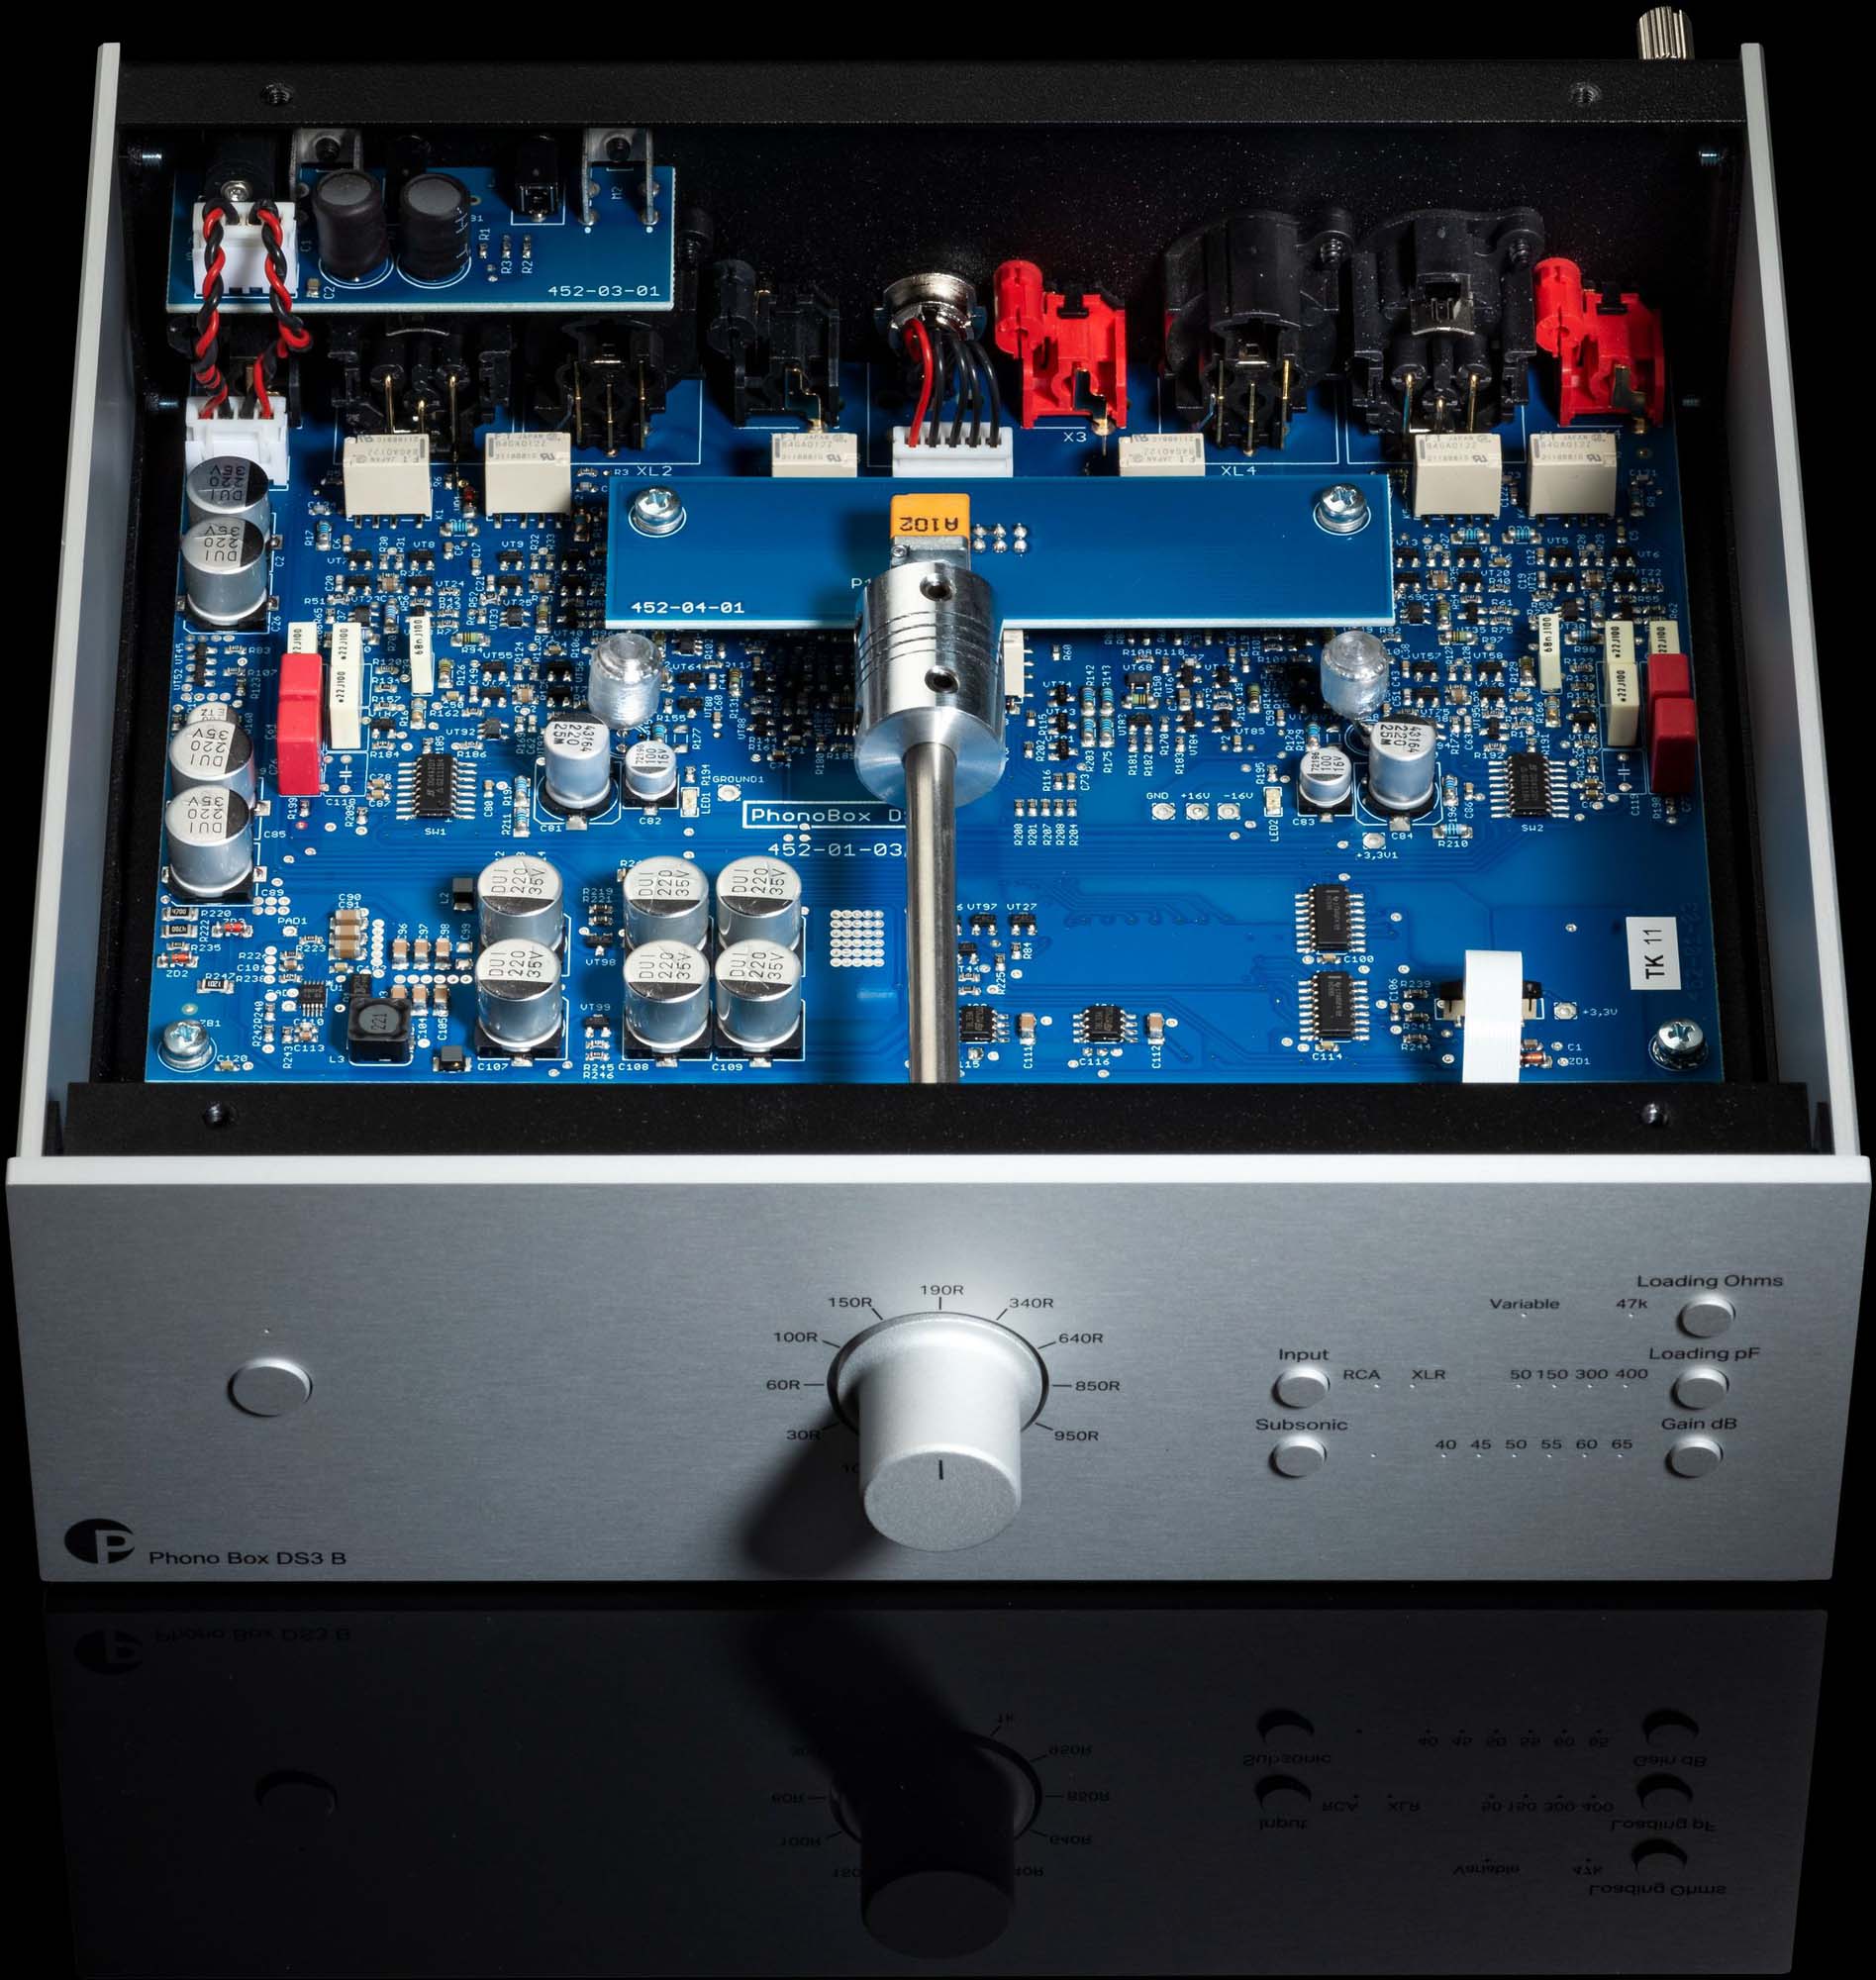 Pro-Ject Phono Box DS3 B Phono Pre-amplifier - Black (Low stock - please enquire)